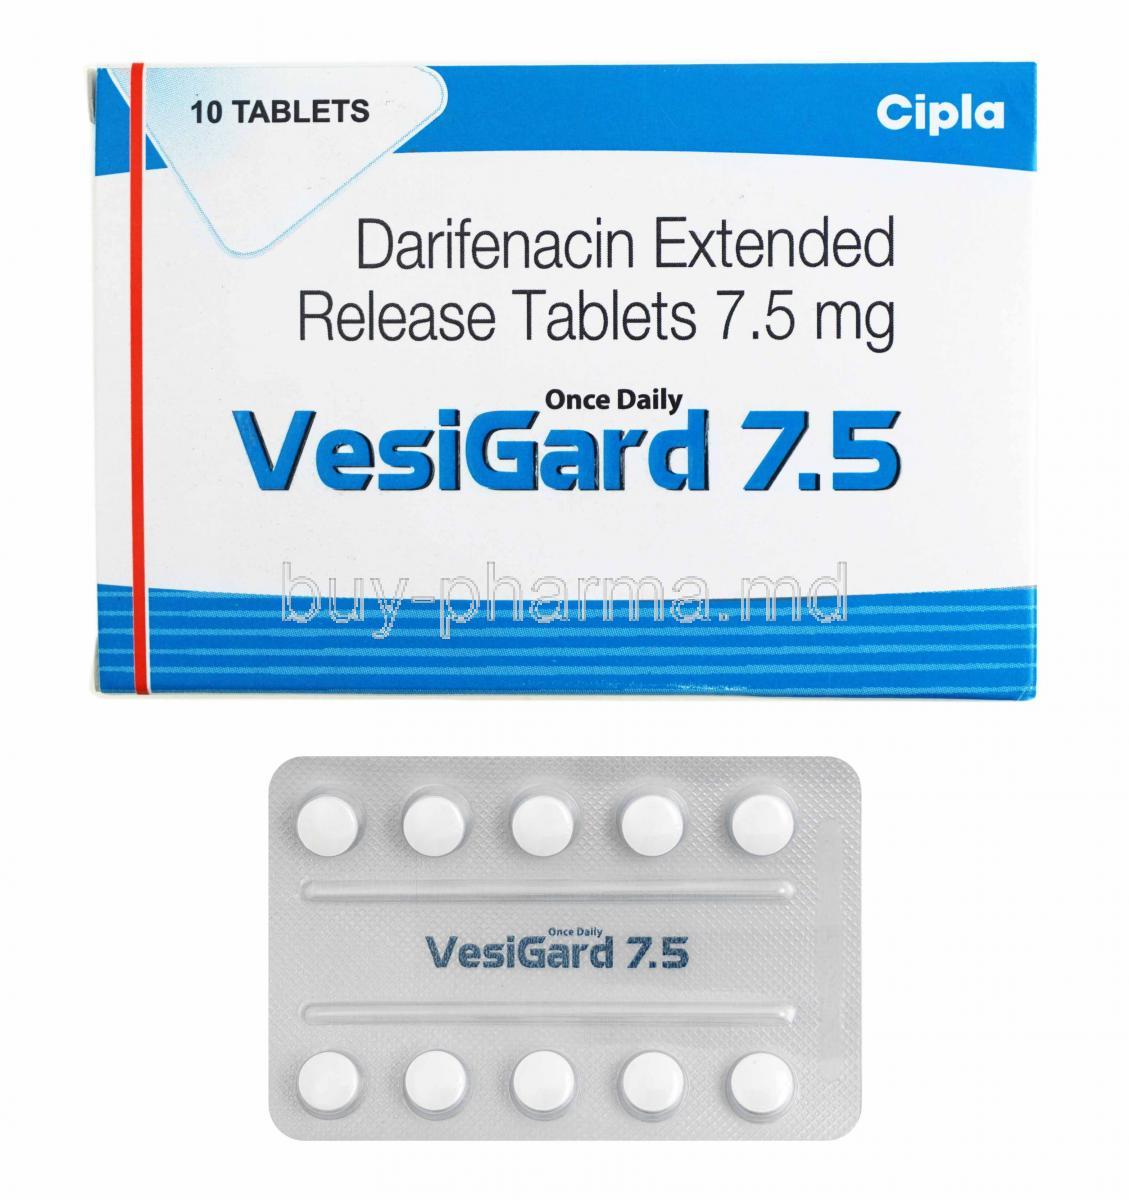 VesiGard, Darifenacin 7.5mg box and tablets